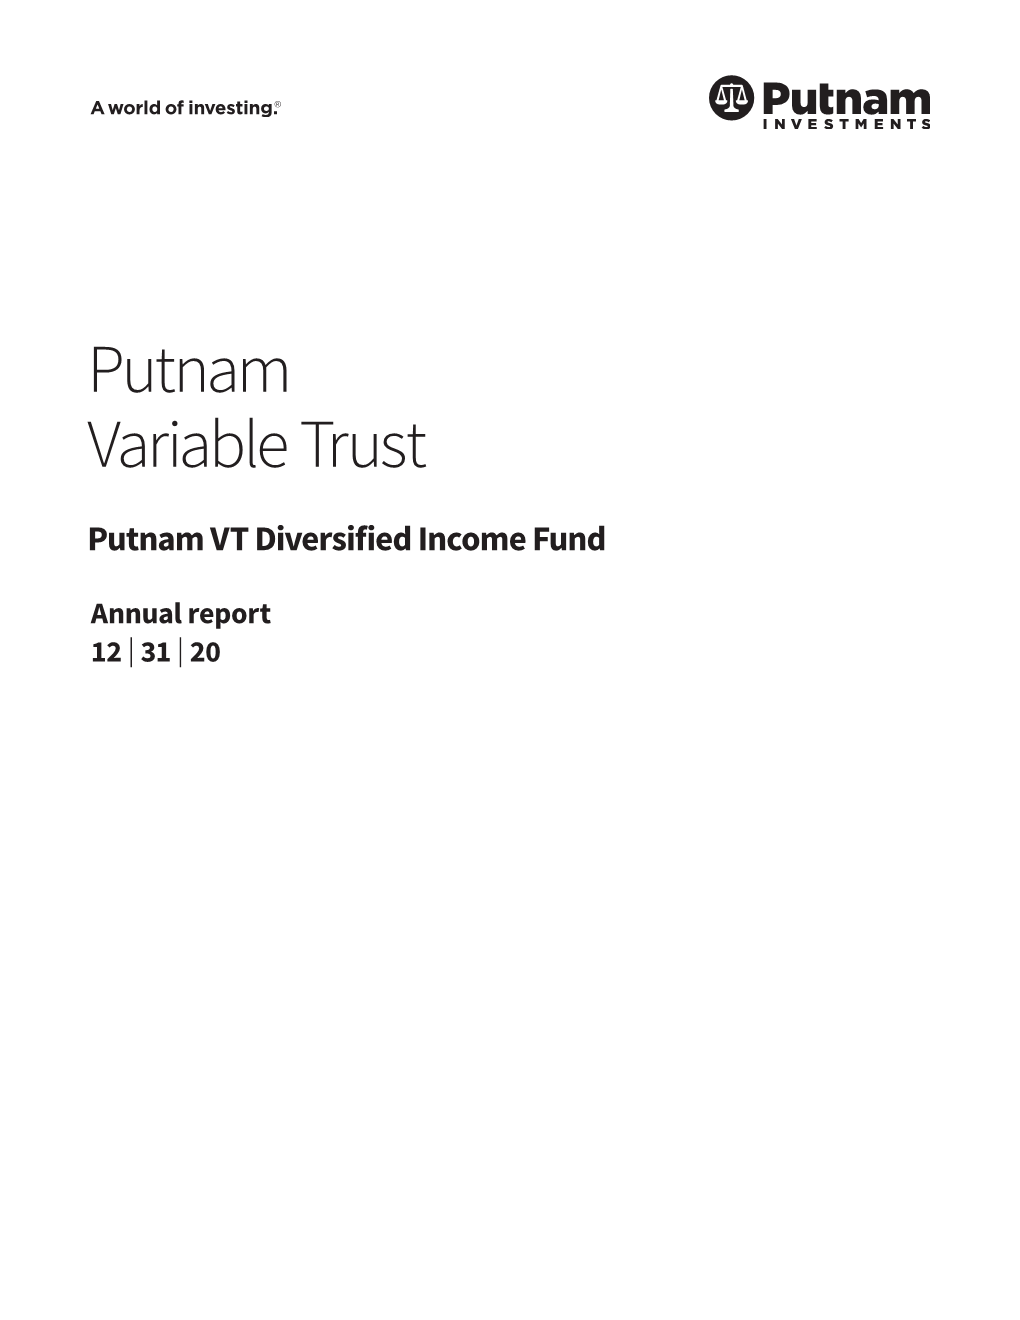 VT Diversified Income Fund Annual Report